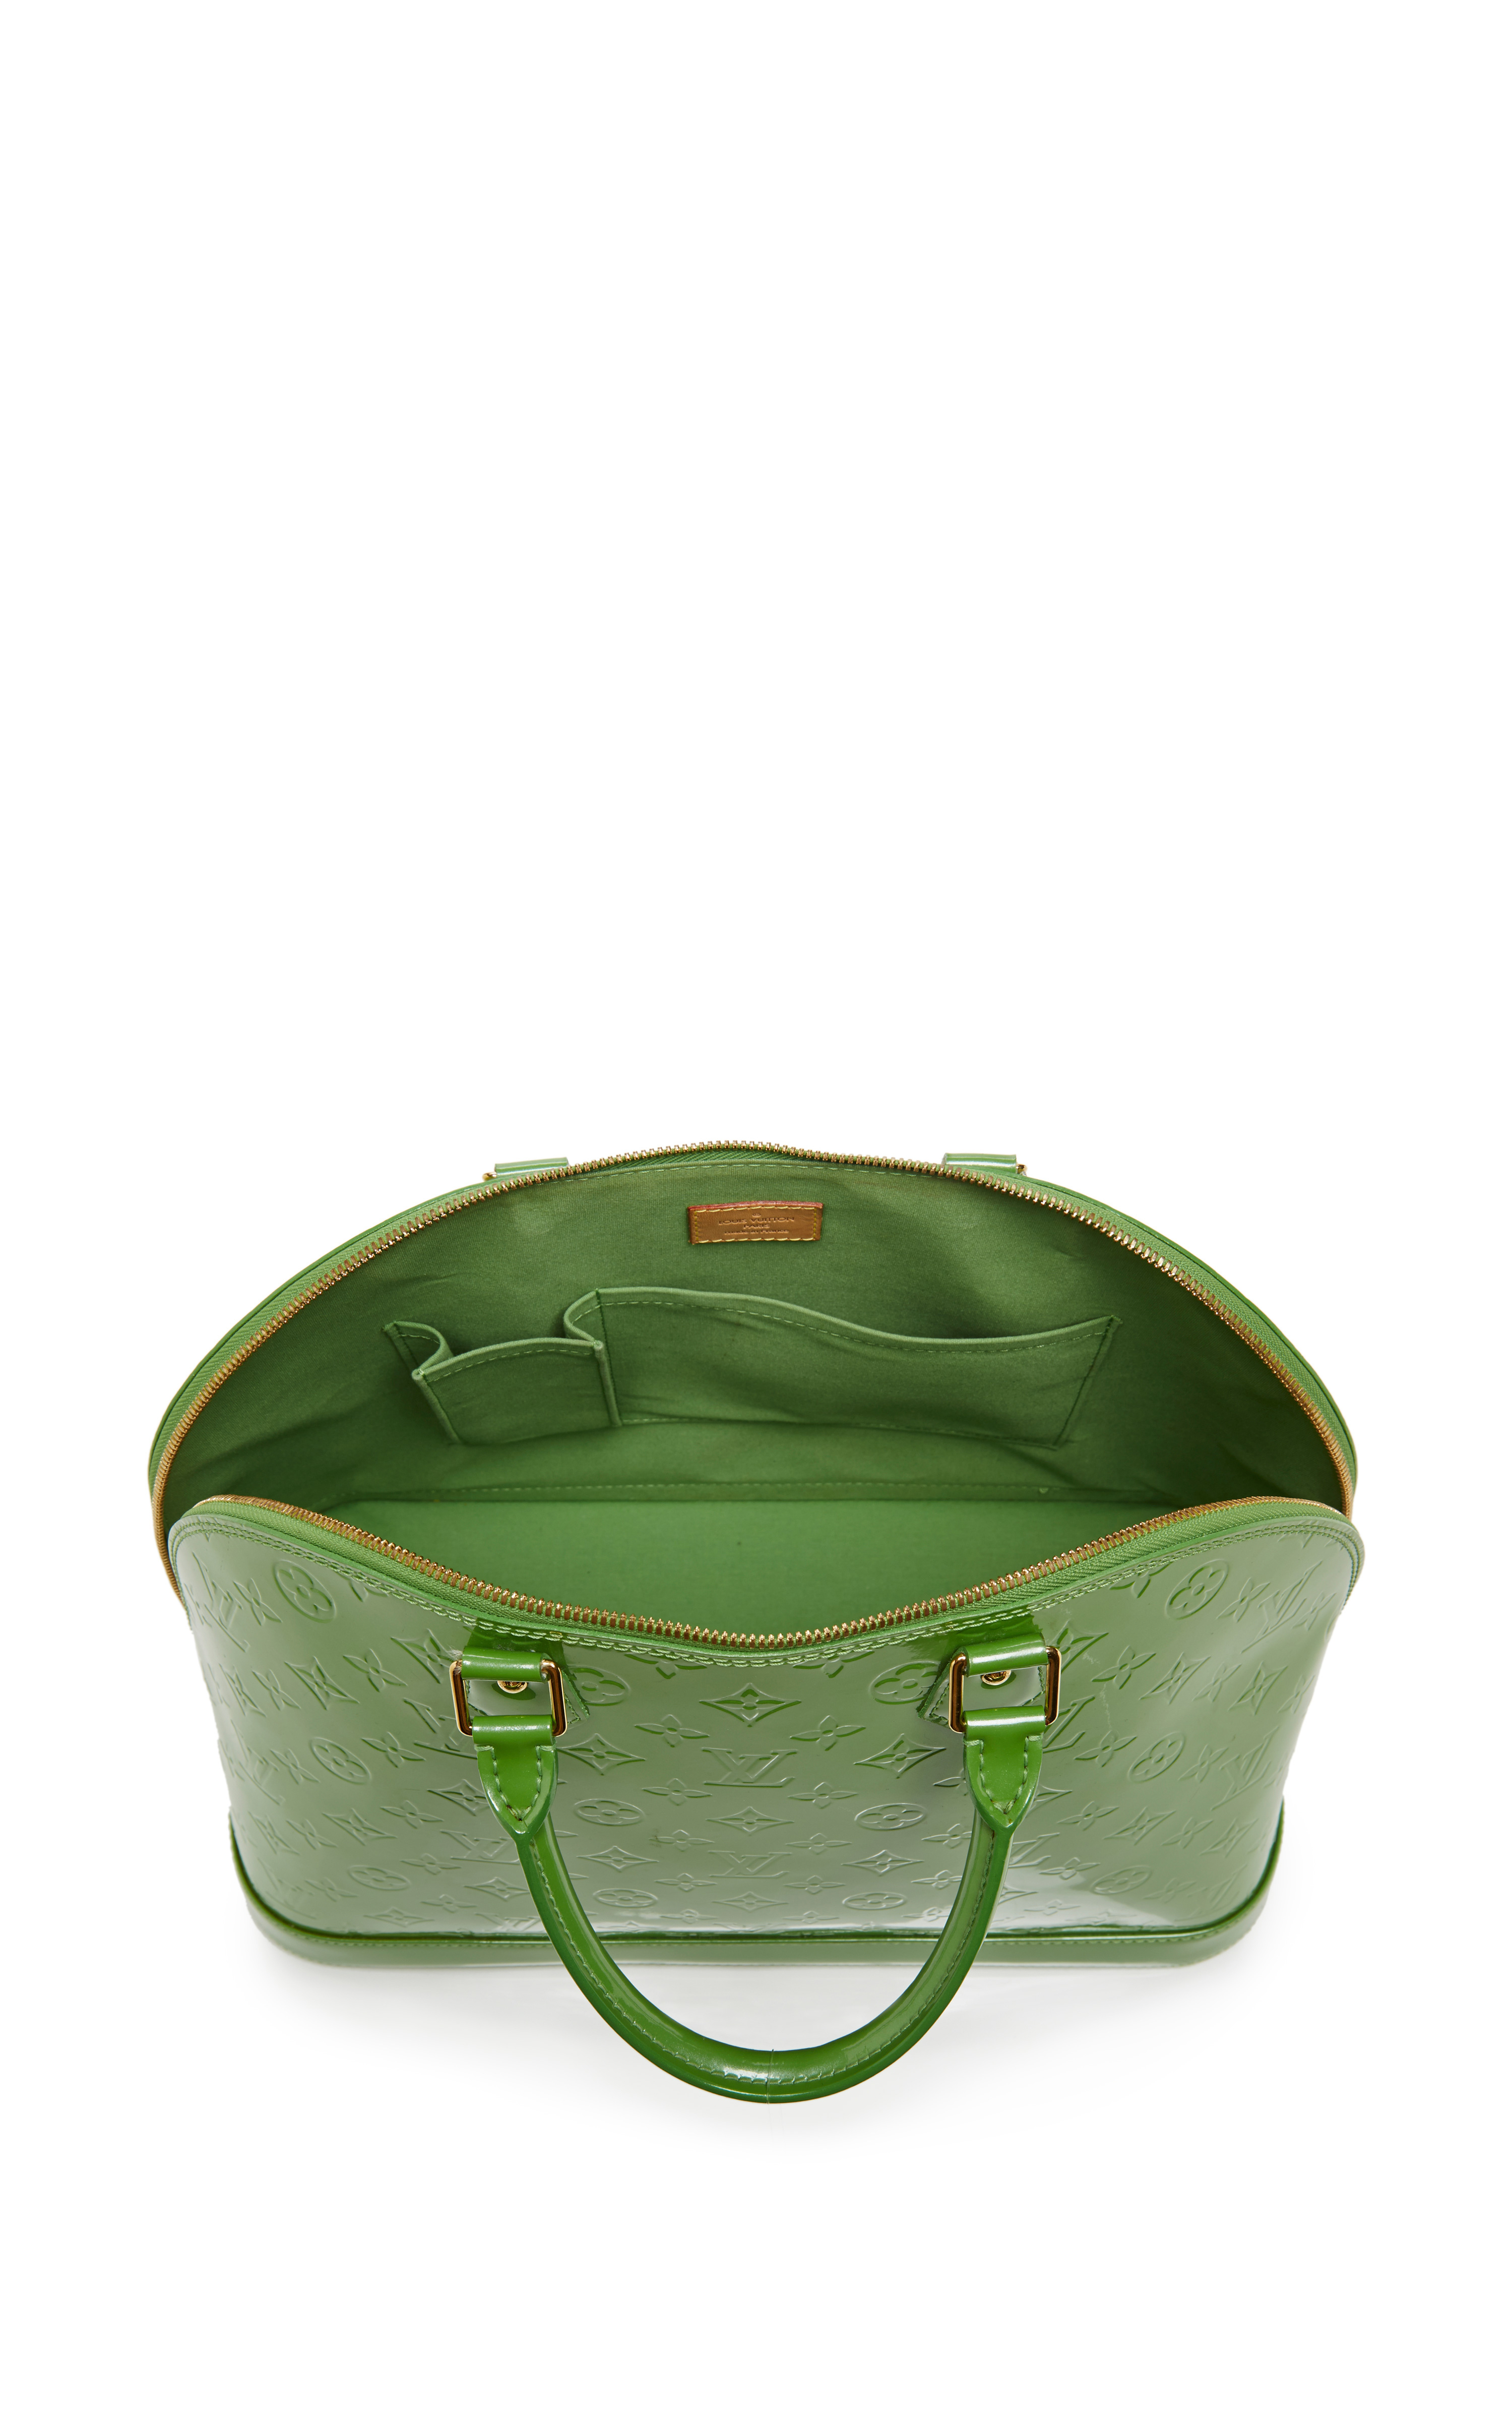 Lyst - Louis Vuitton Green Vernis Alma Gm in Green